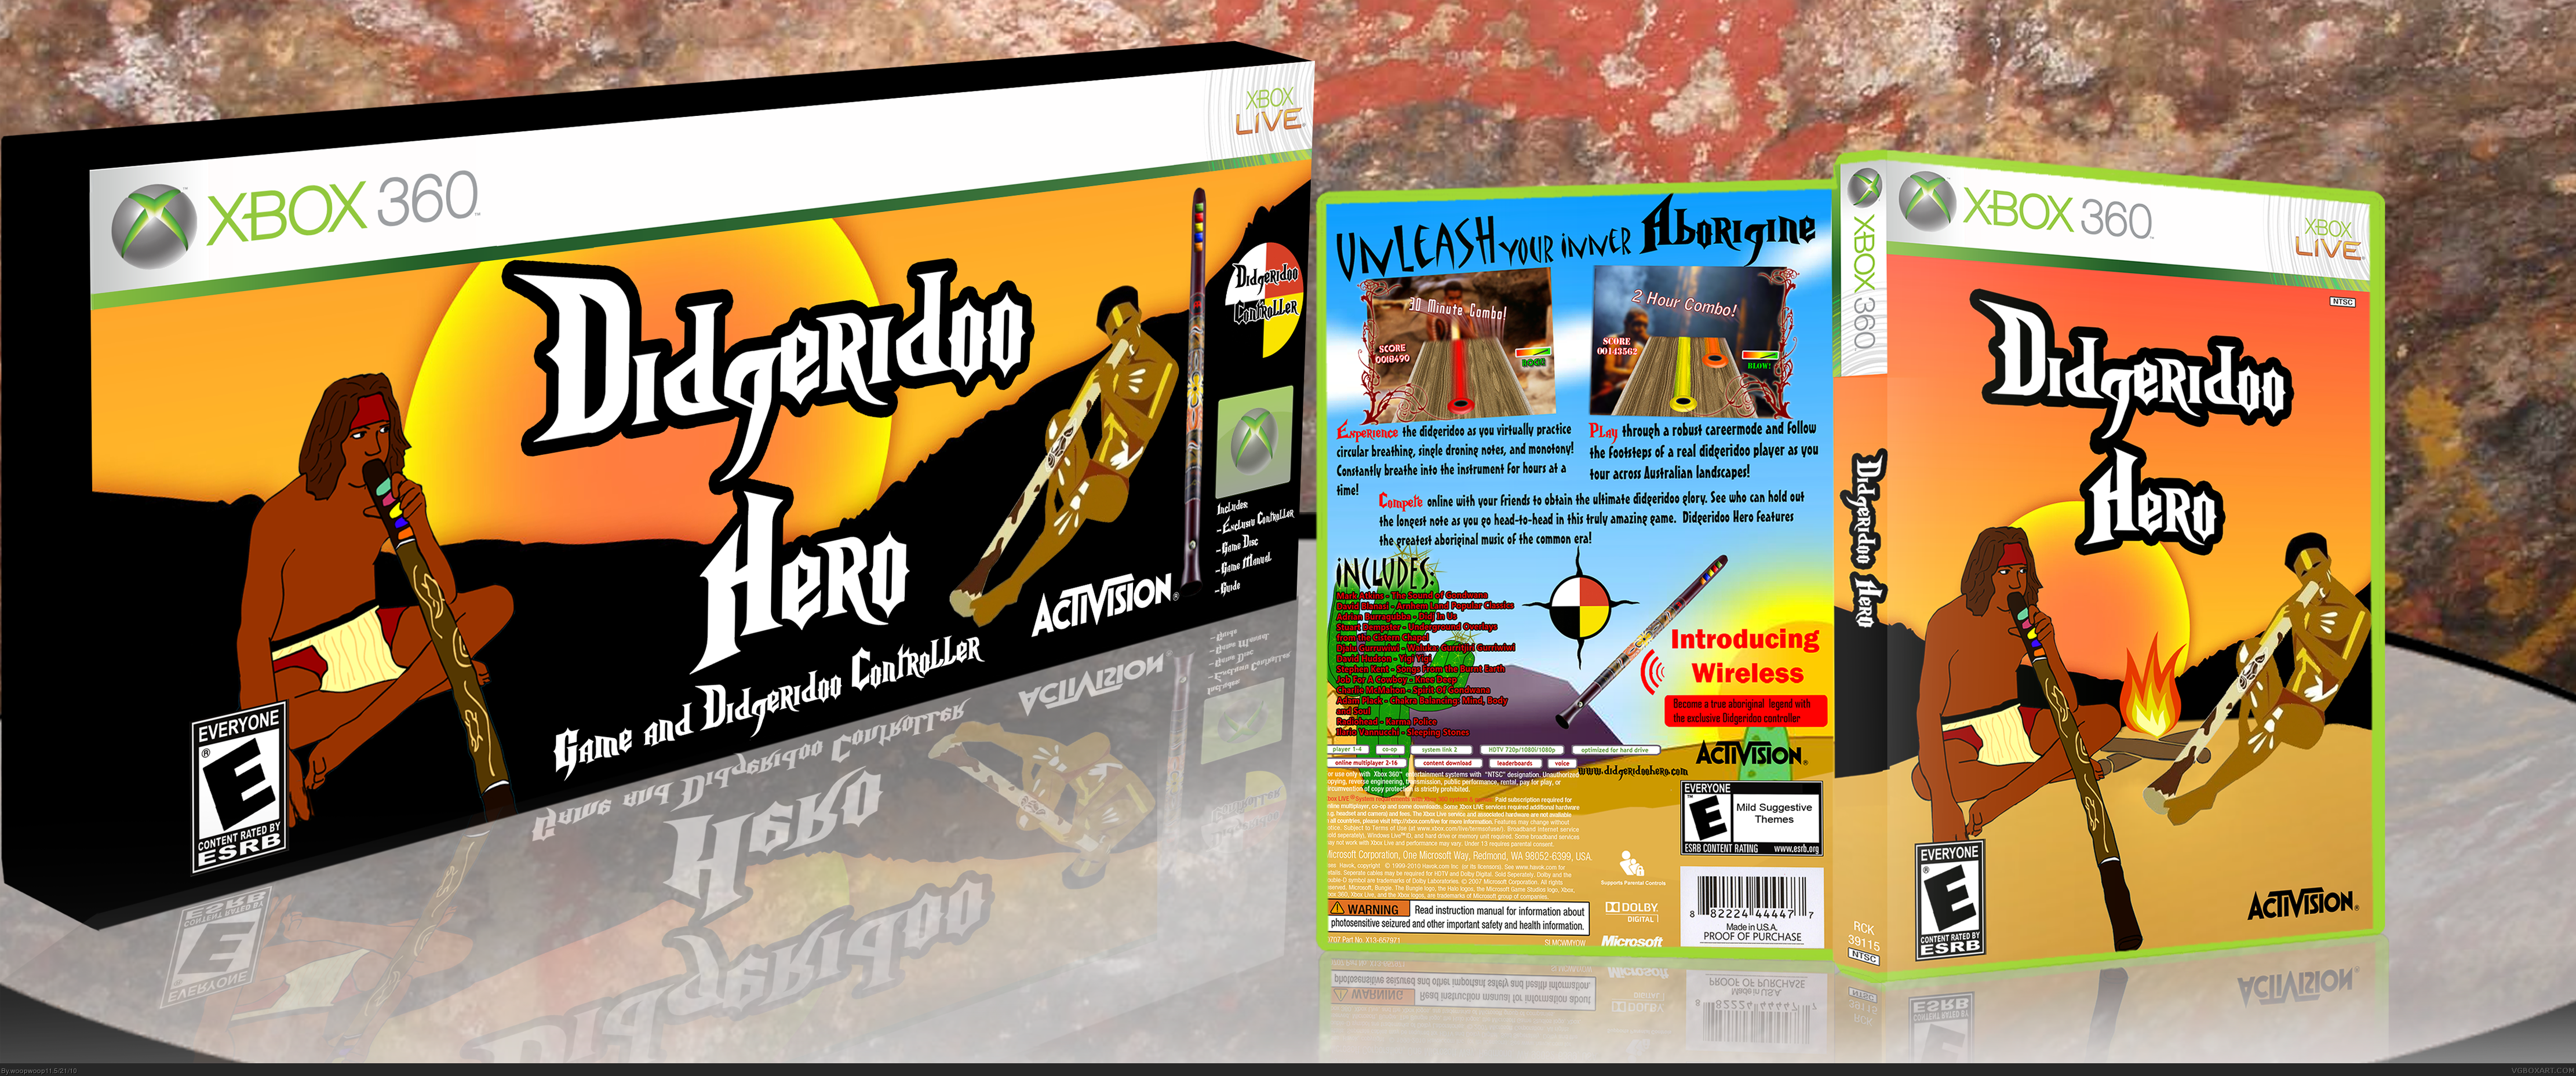 Didgeridoo Hero box cover